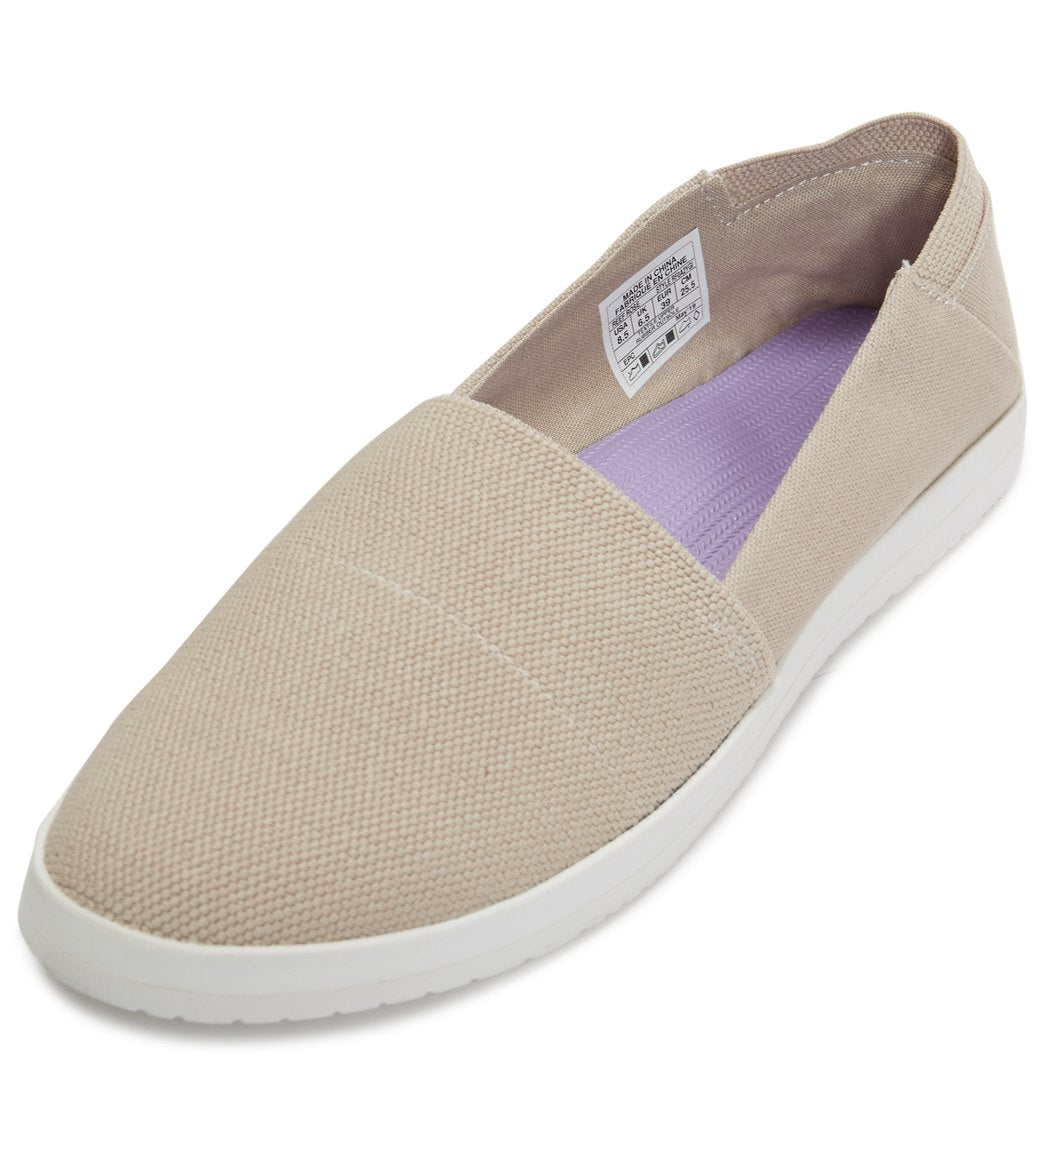 Reef Women's Rose Slip On Shoes Shoes Shoe - Grey 9.5 Cotton - Swimoutlet.com